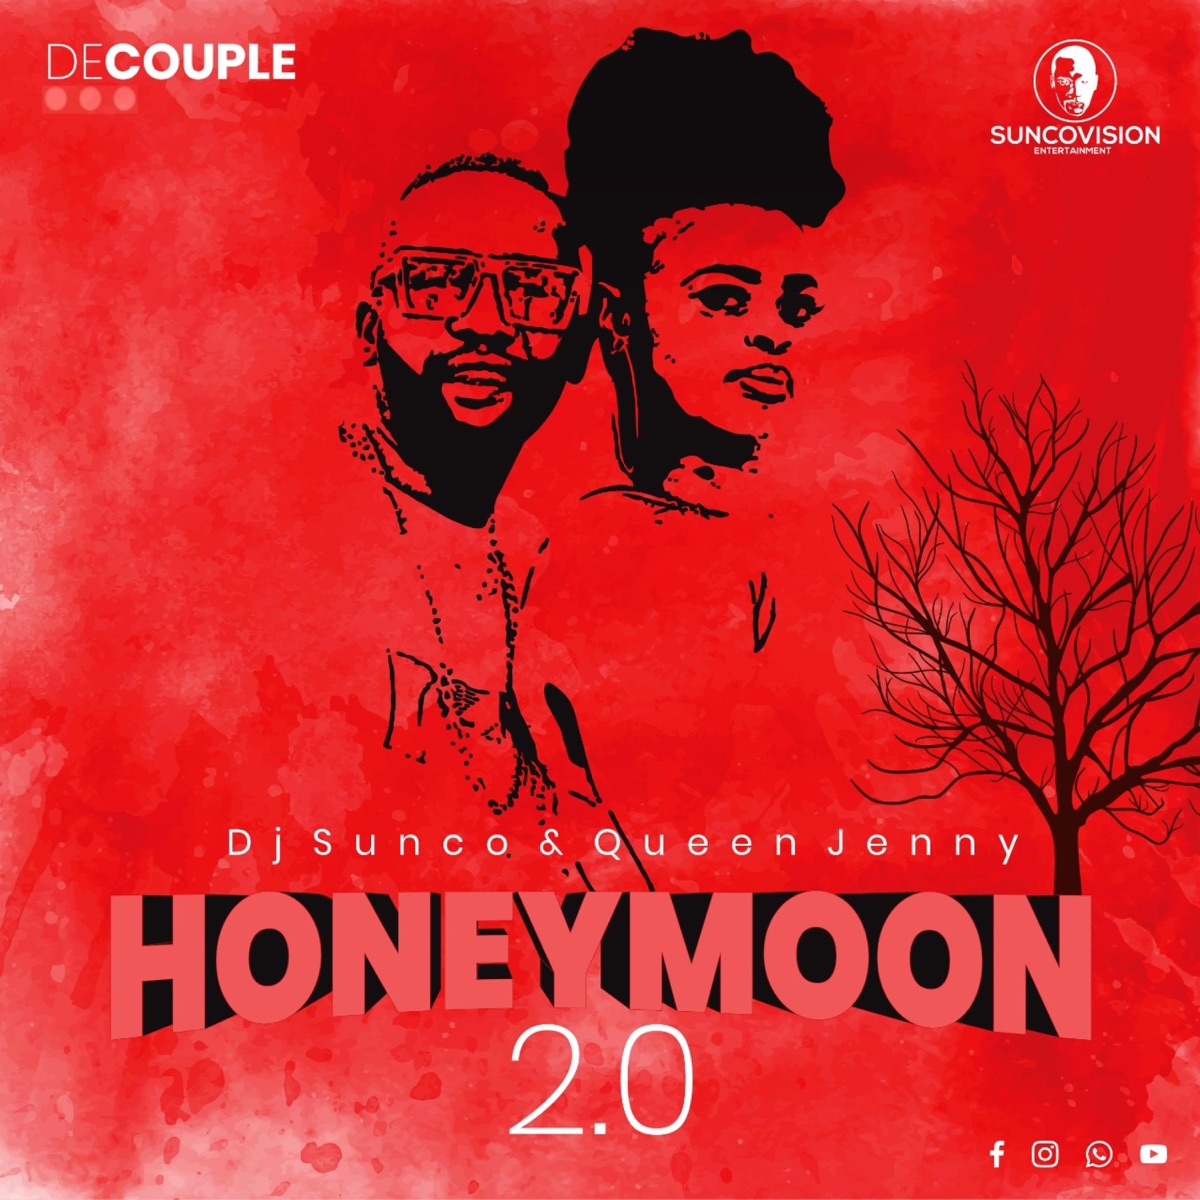 Honeymoon 2.0 - Album by Decouple SA - Apple Music